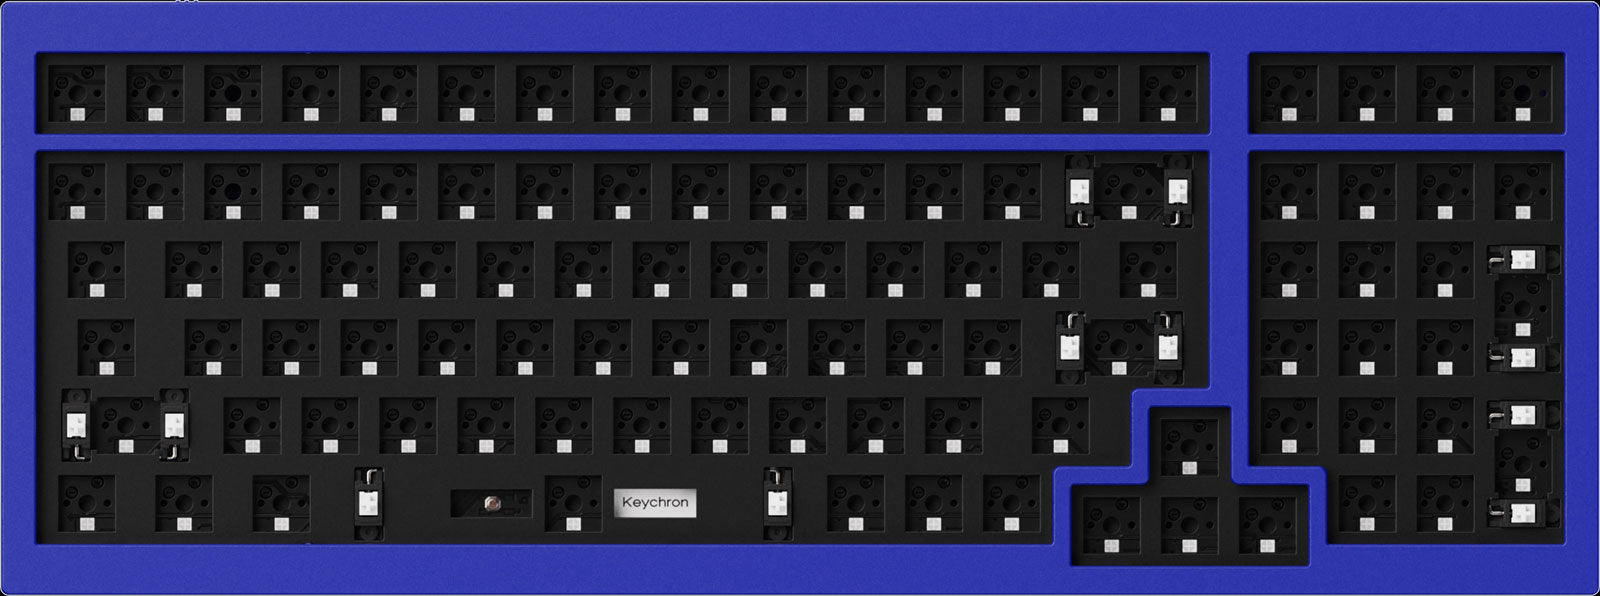 Keychron Q5 1800 緊湊型定制機械鍵盤的準系統美國佈局